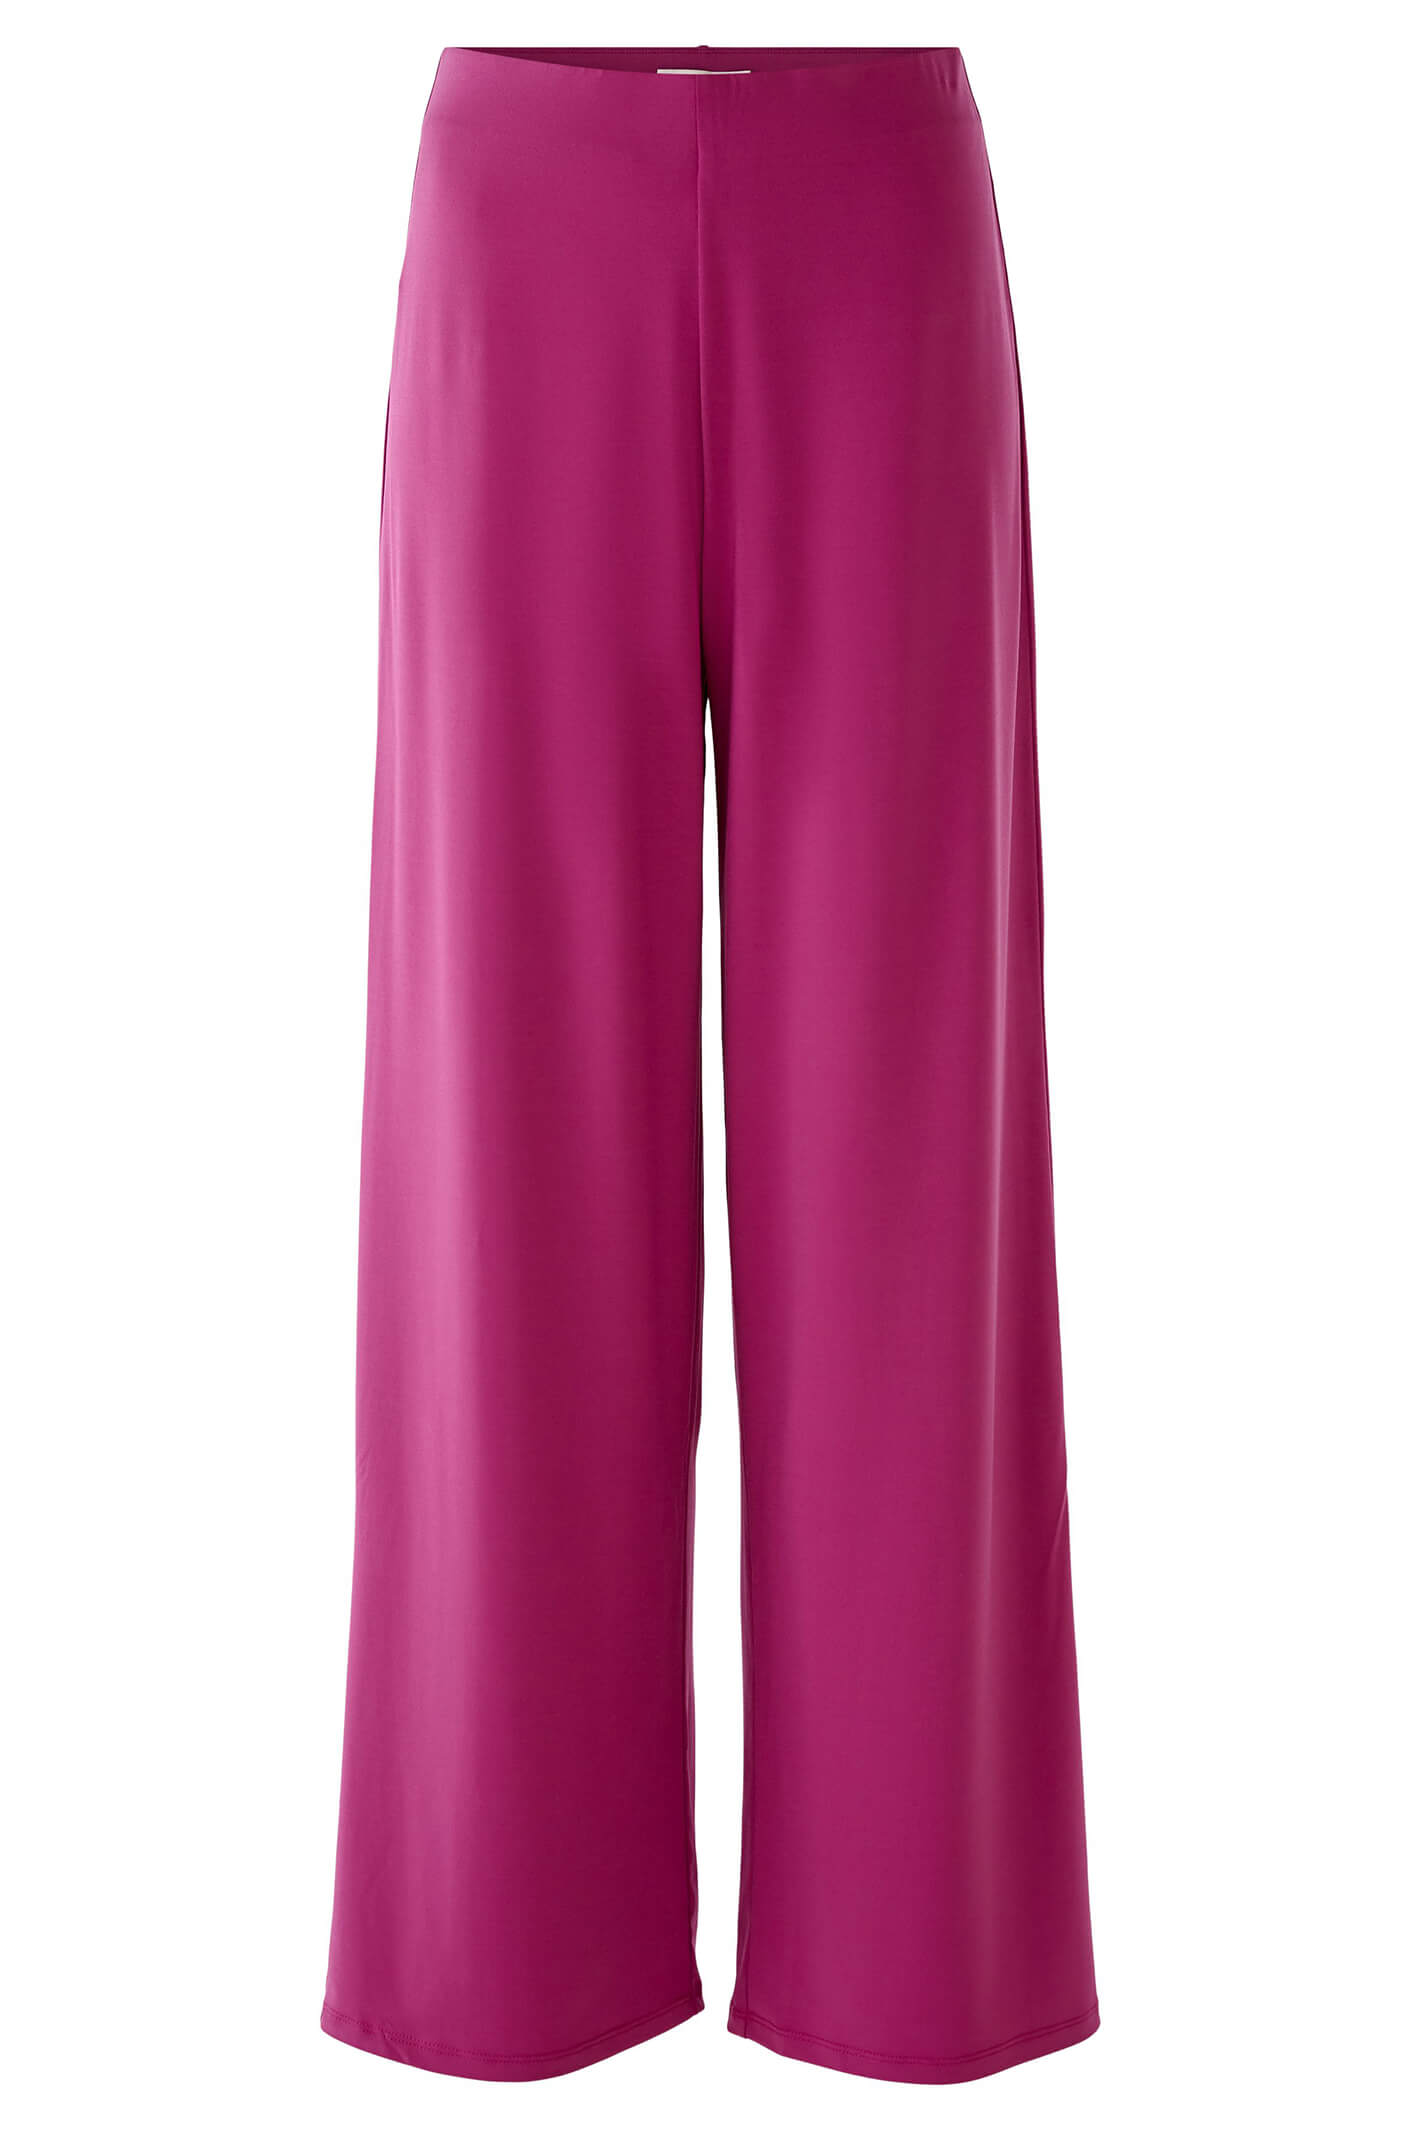 Oui 79210 Clover Pink Wide Leg Trousers | Olivia Grace – Olivia Grace ...